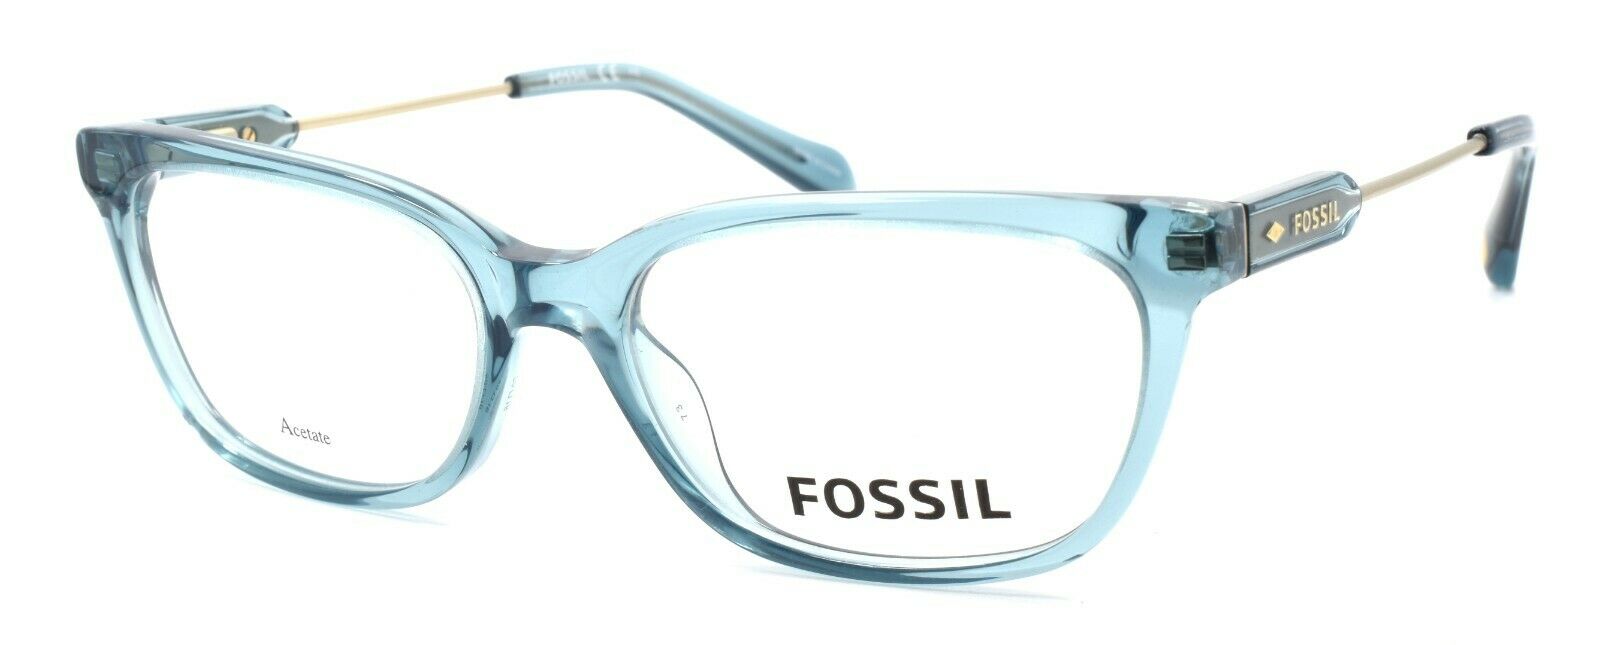 1-Fossil FOS 6077 RWO Women's Eyeglasses Frames 50-16-135 Turquoise + CASE-827886359424-IKSpecs